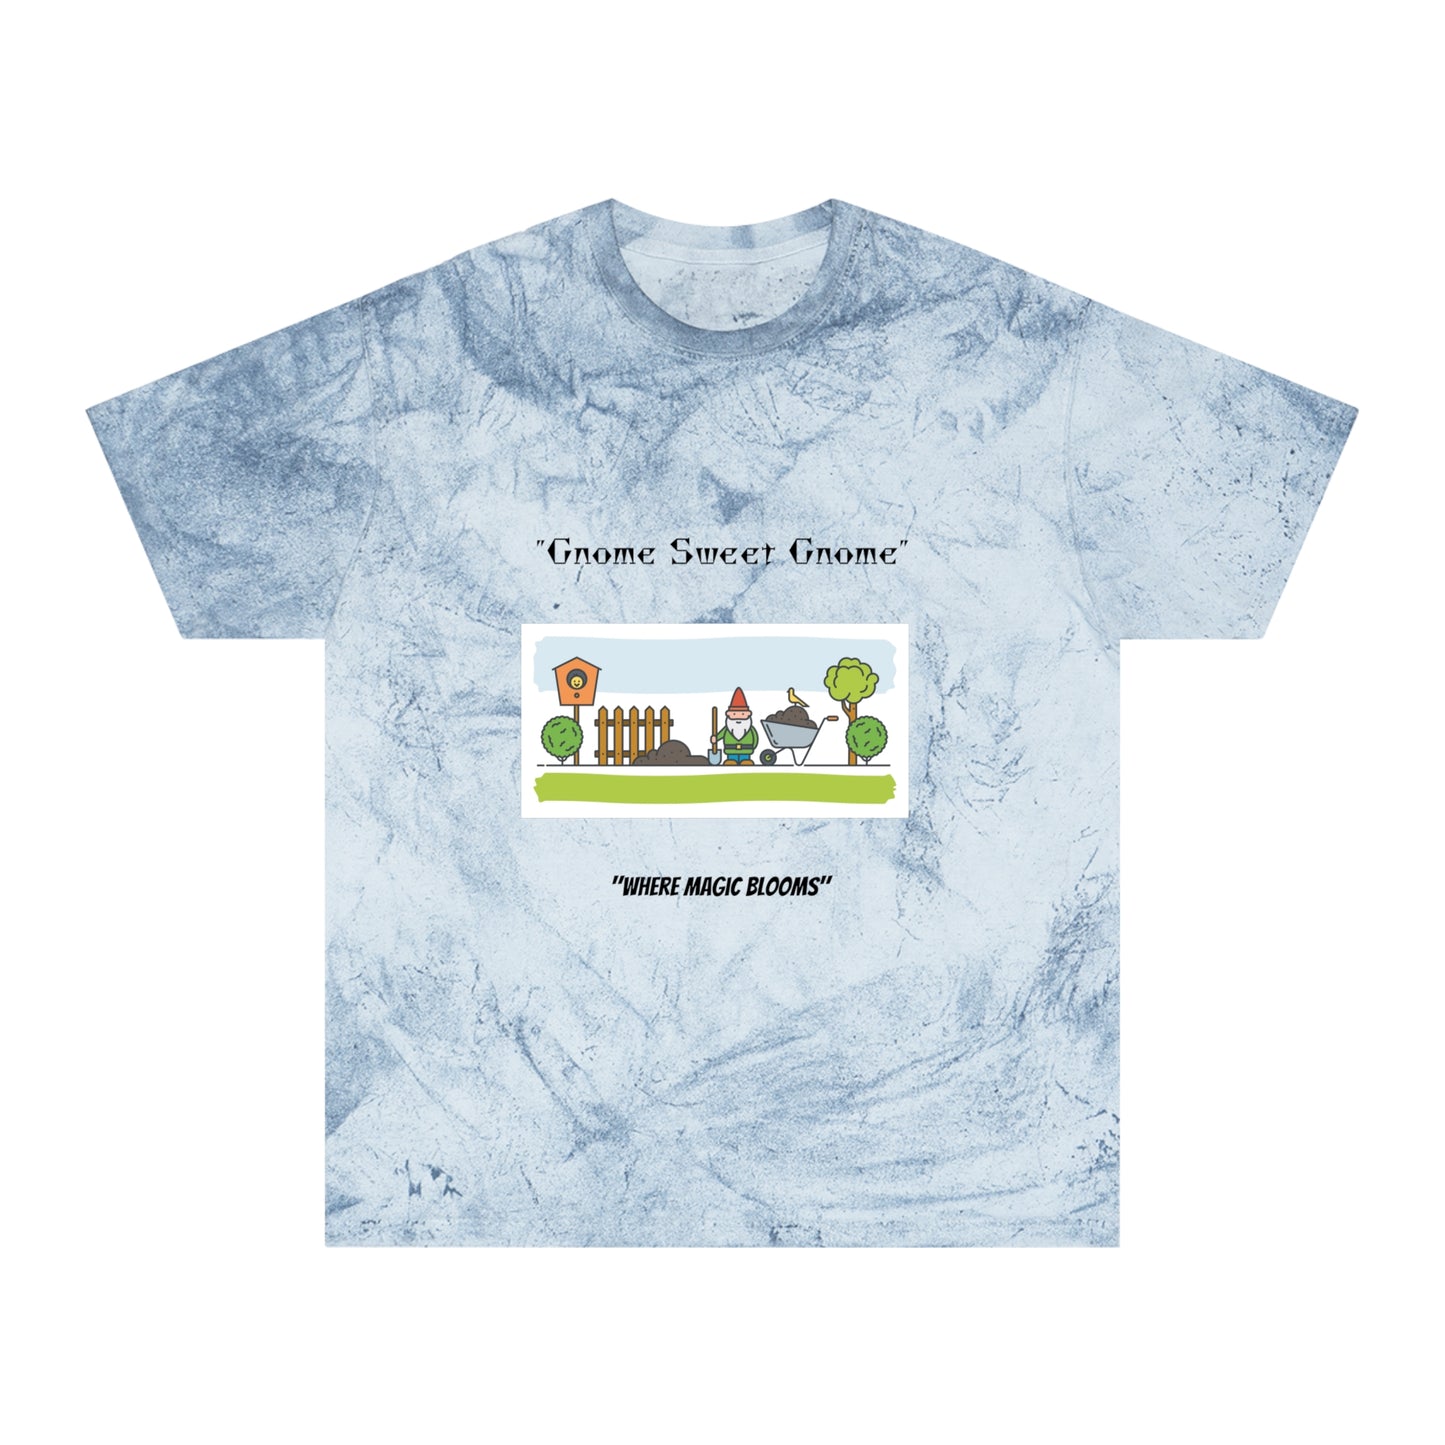 Gnome Sweet Gnome Color Blast T-shirt